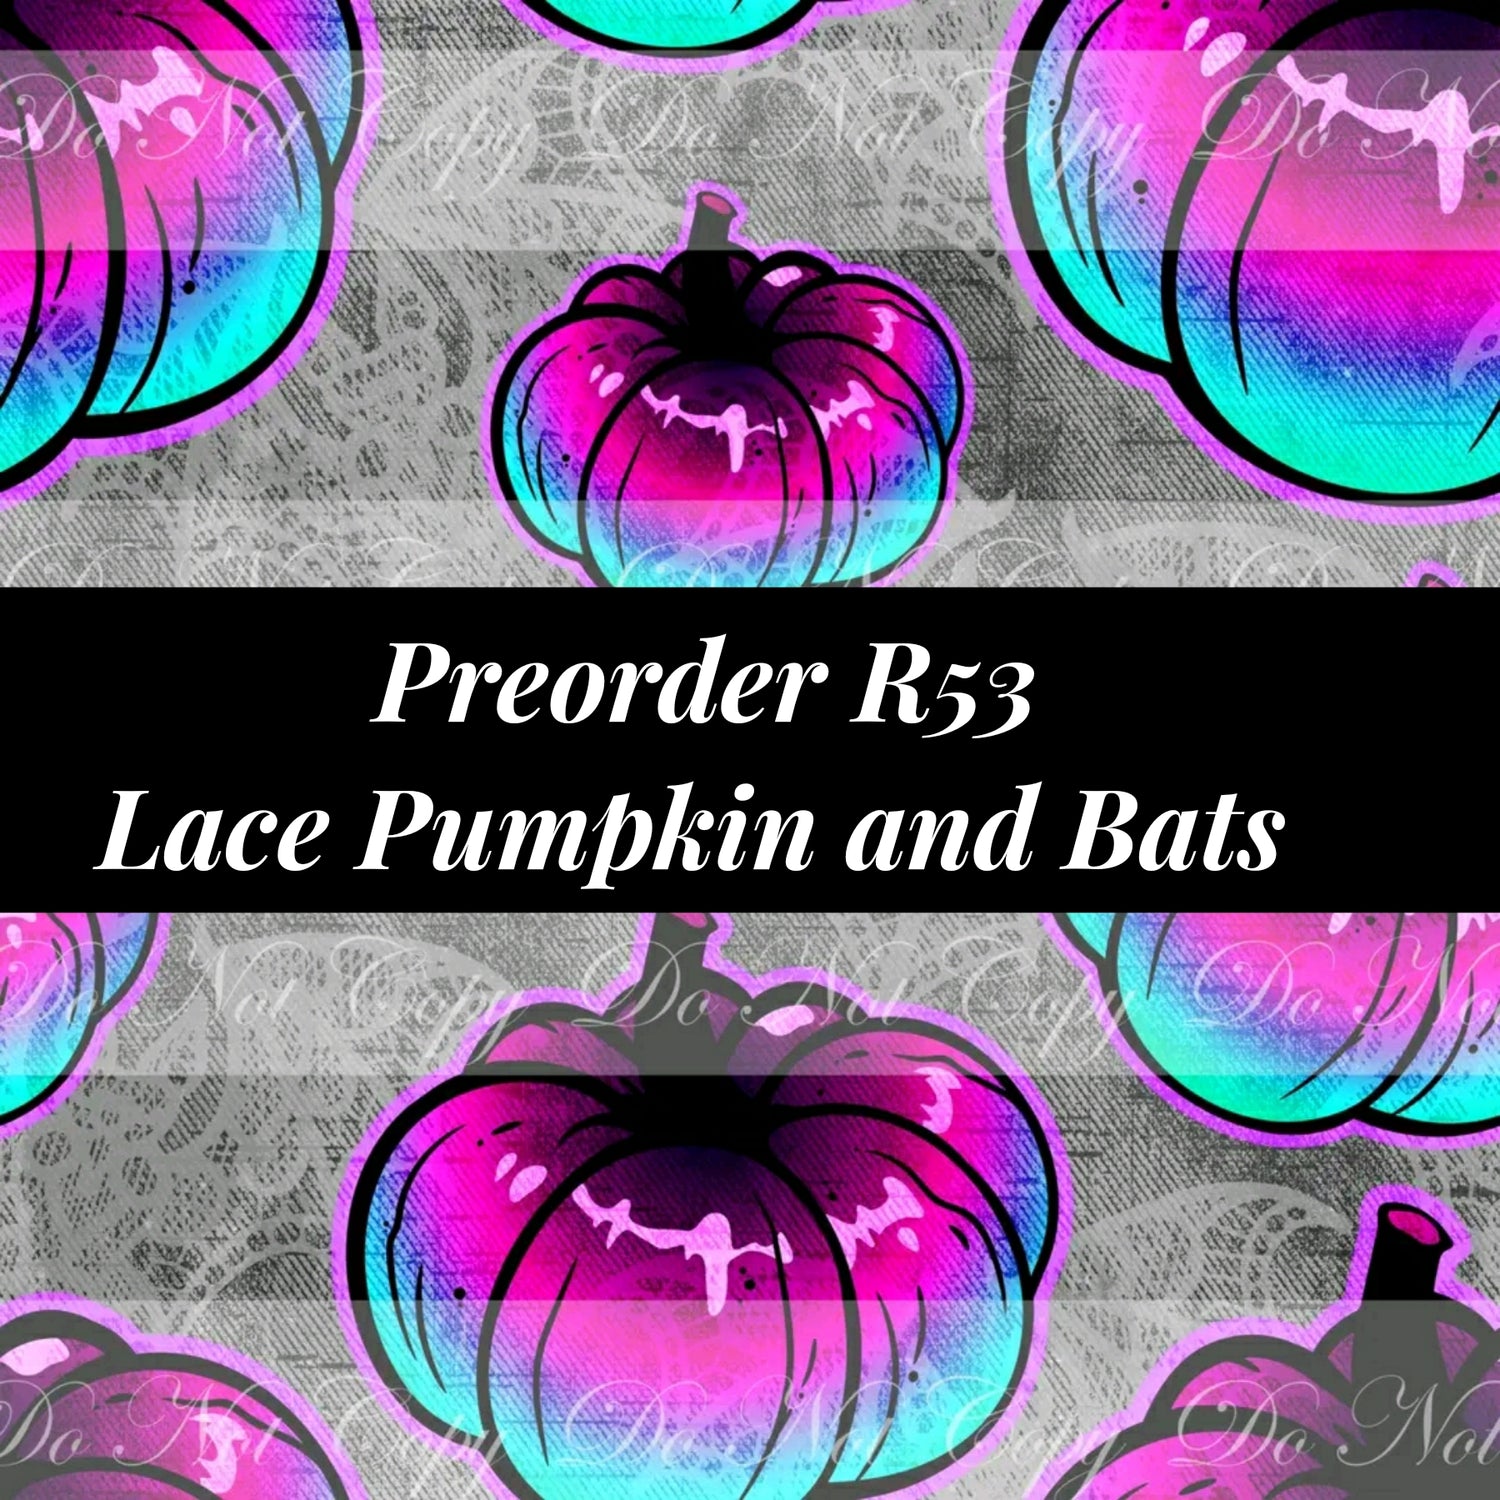 Preorder R53 Lace Pumpkins